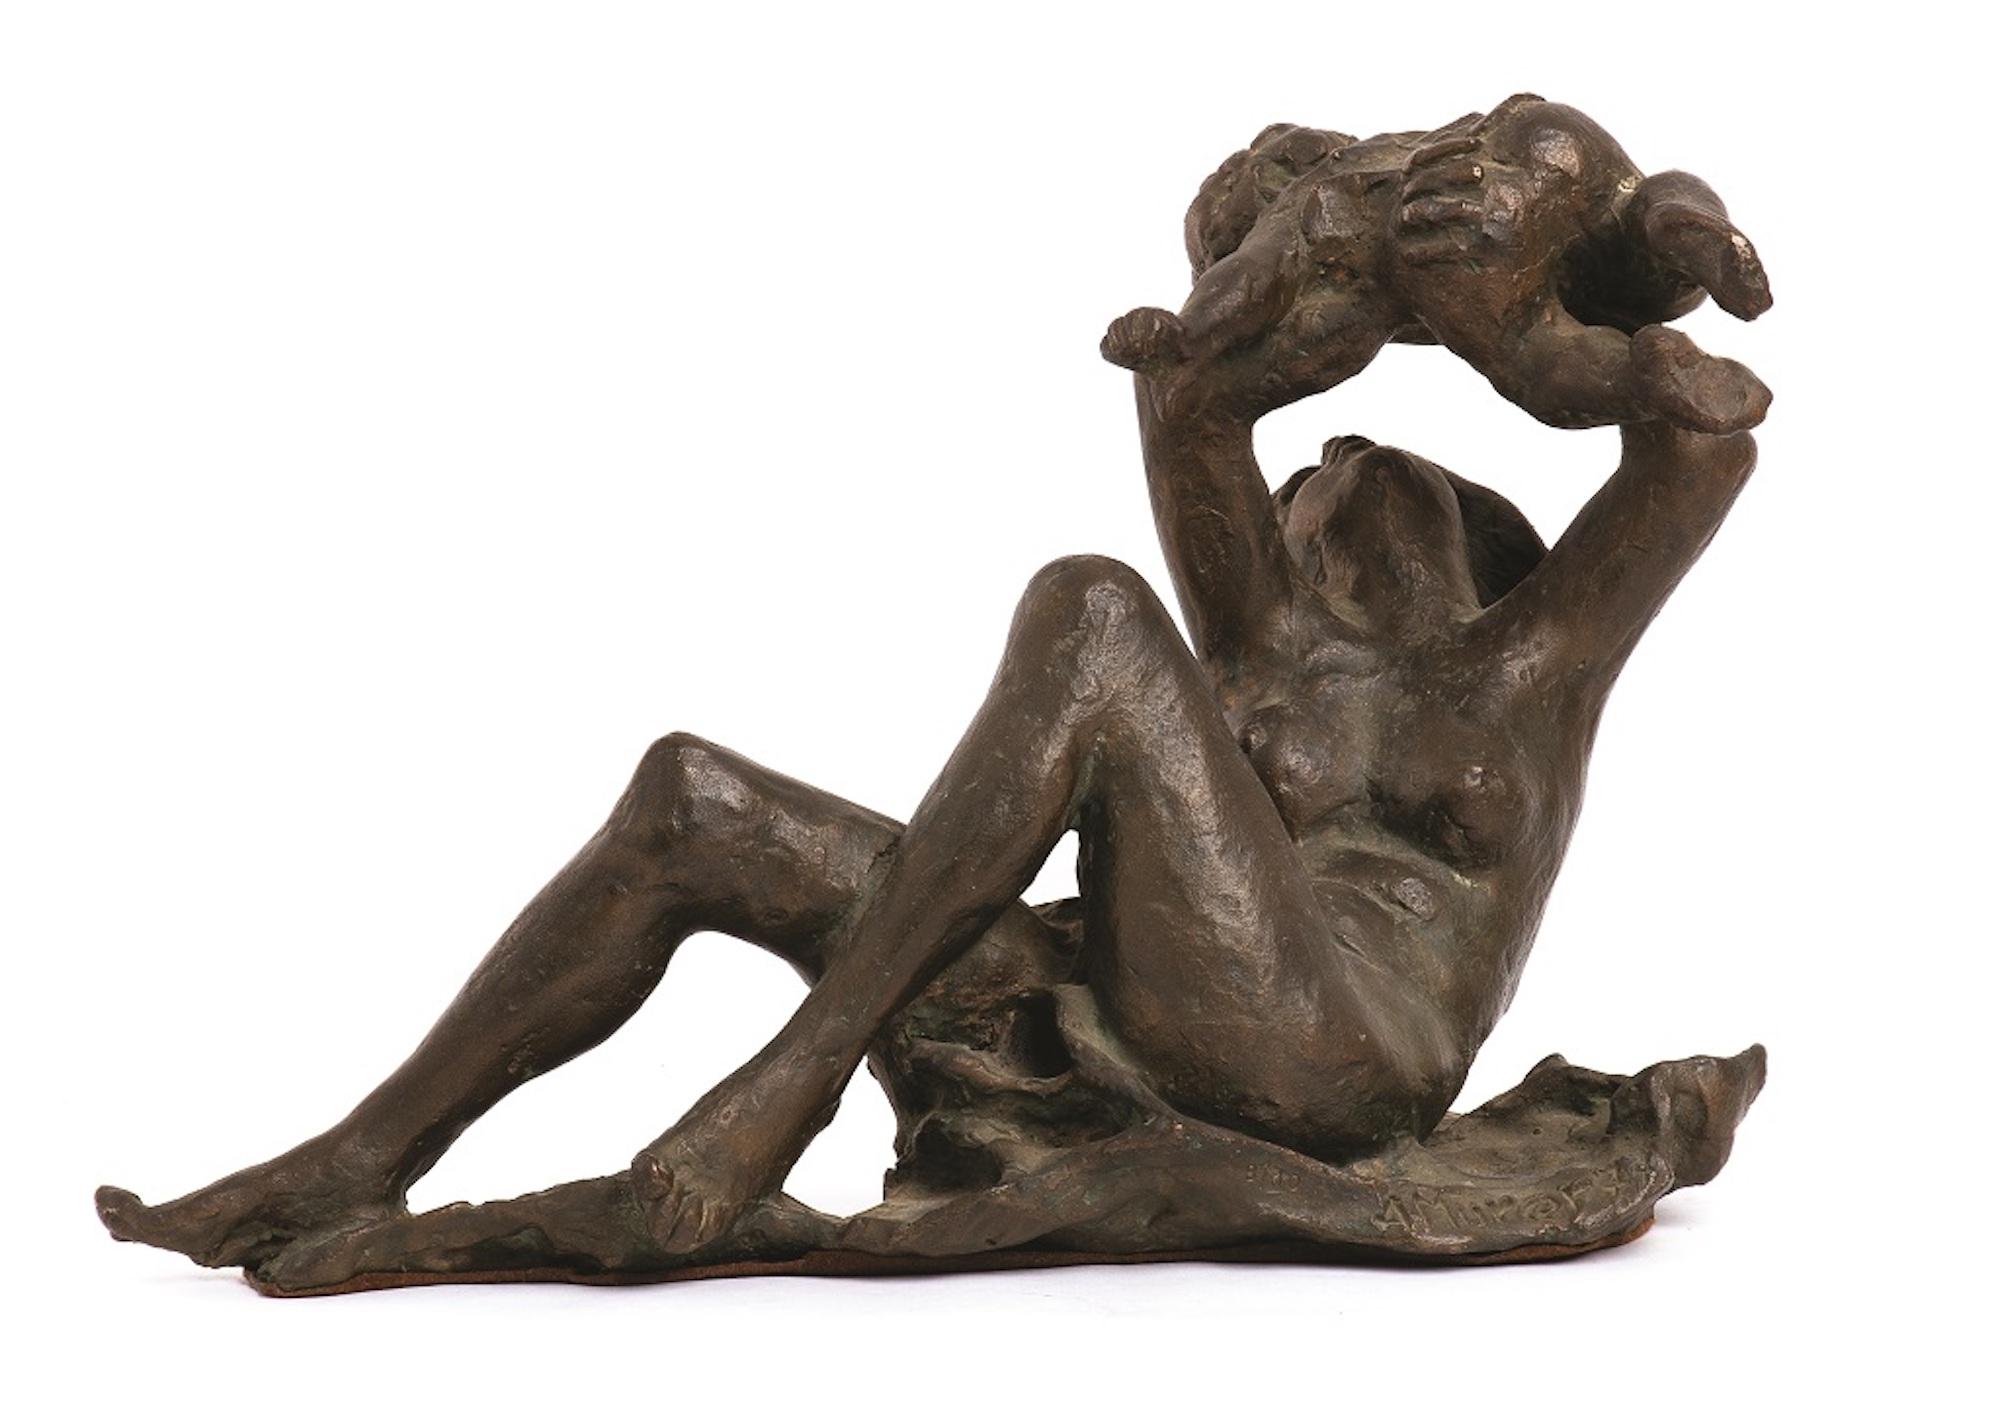 Aurelio Murer Figurative Sculpture - Woman with Baby - Original Bronze Sculpture by A. Murer - 1977